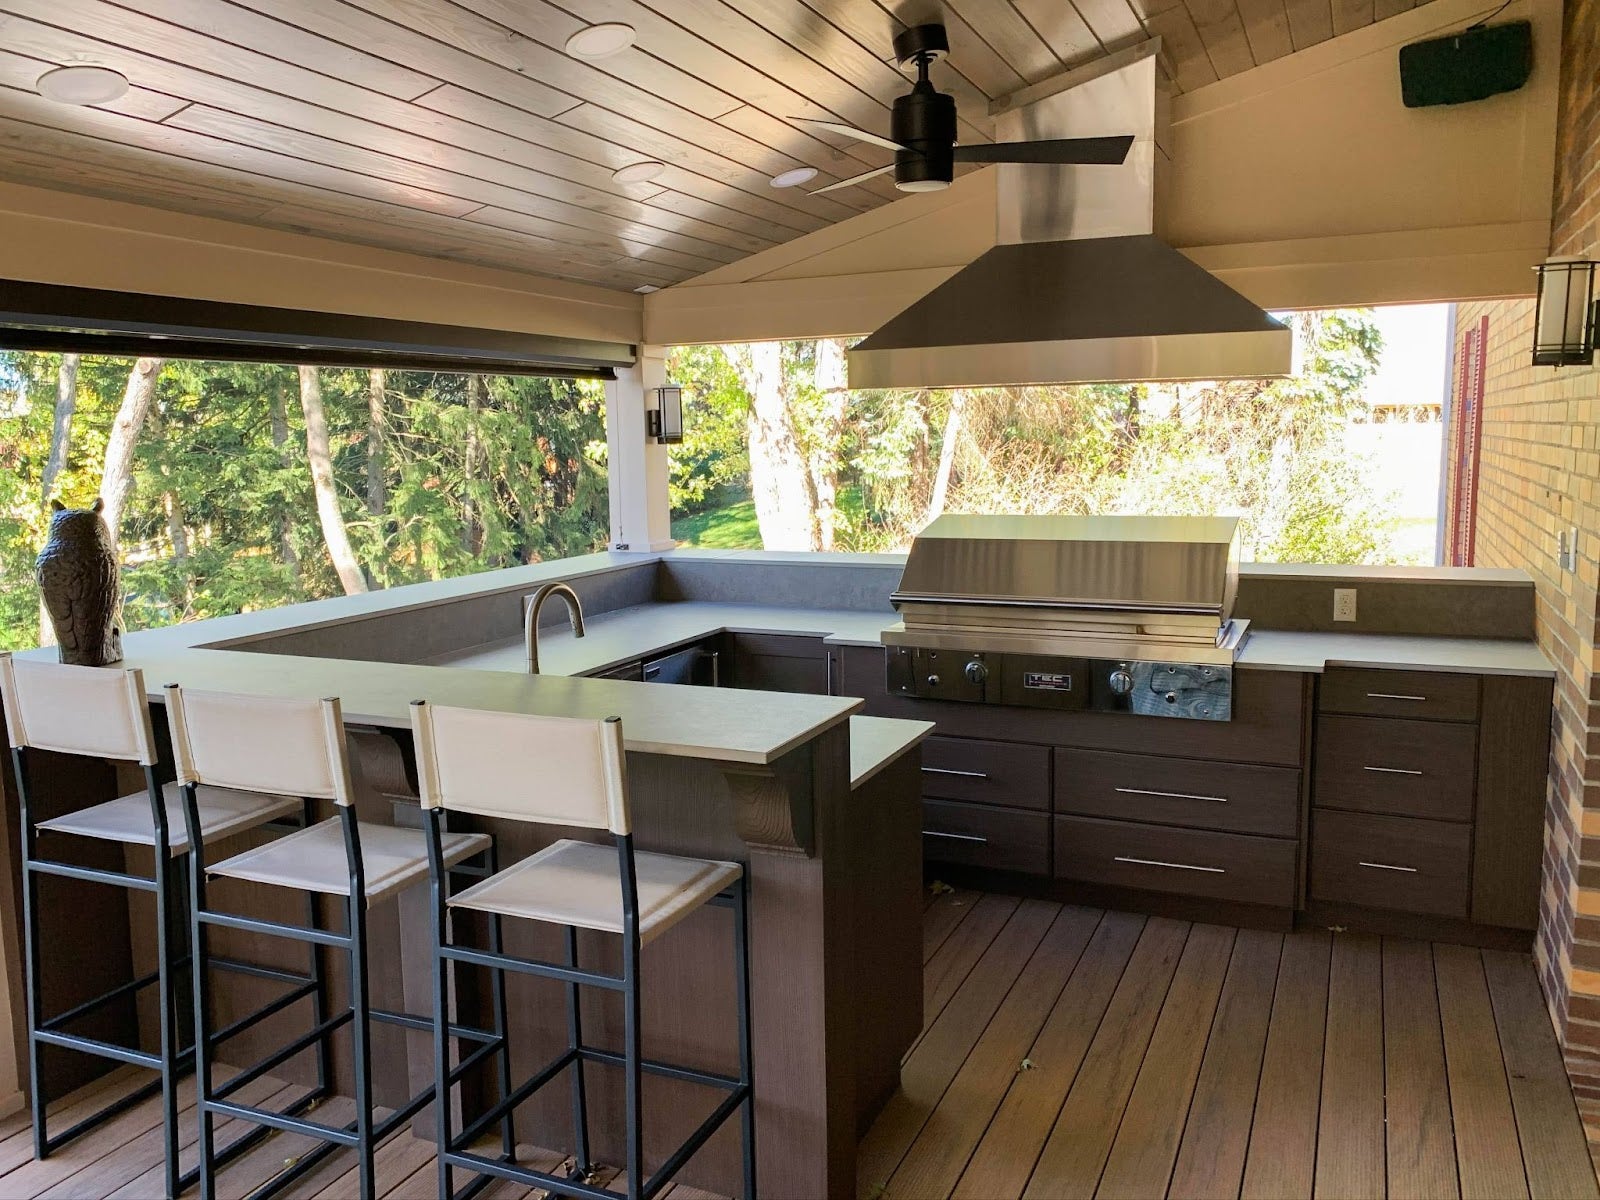 Outdoor kitchen with Proline range hood, bar stools, and wood decking nestled in nature - prolinerangehoods.com